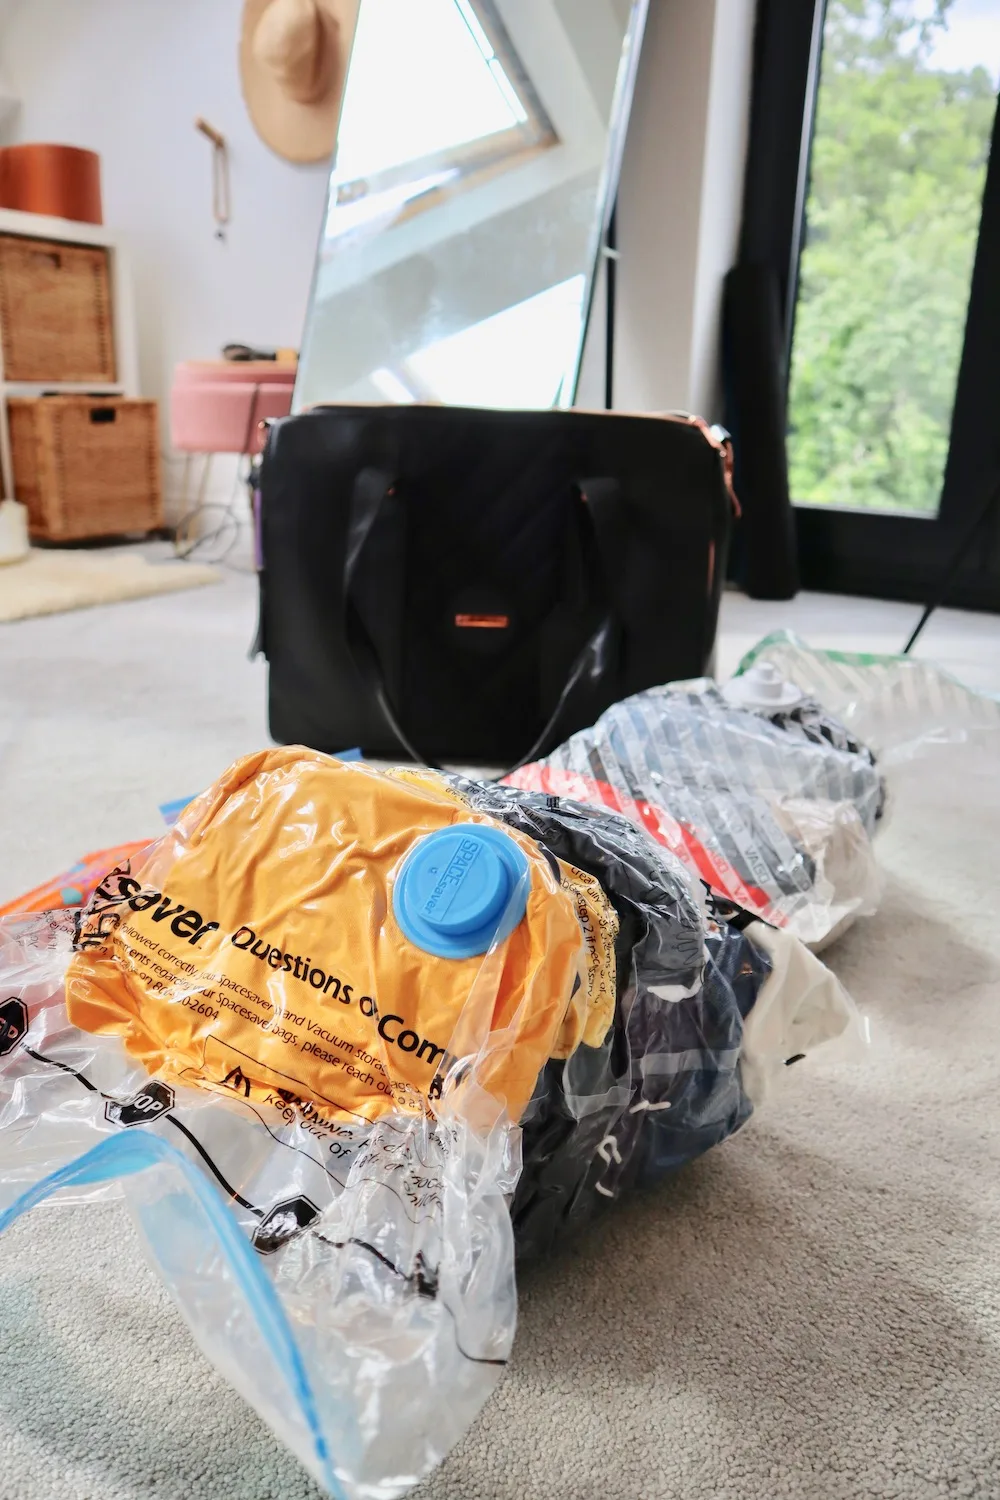 Easyjet Cabin Bag 45X36X20 Underseat Travel Bag Hand Luggage Bag Recycled  PET Ec